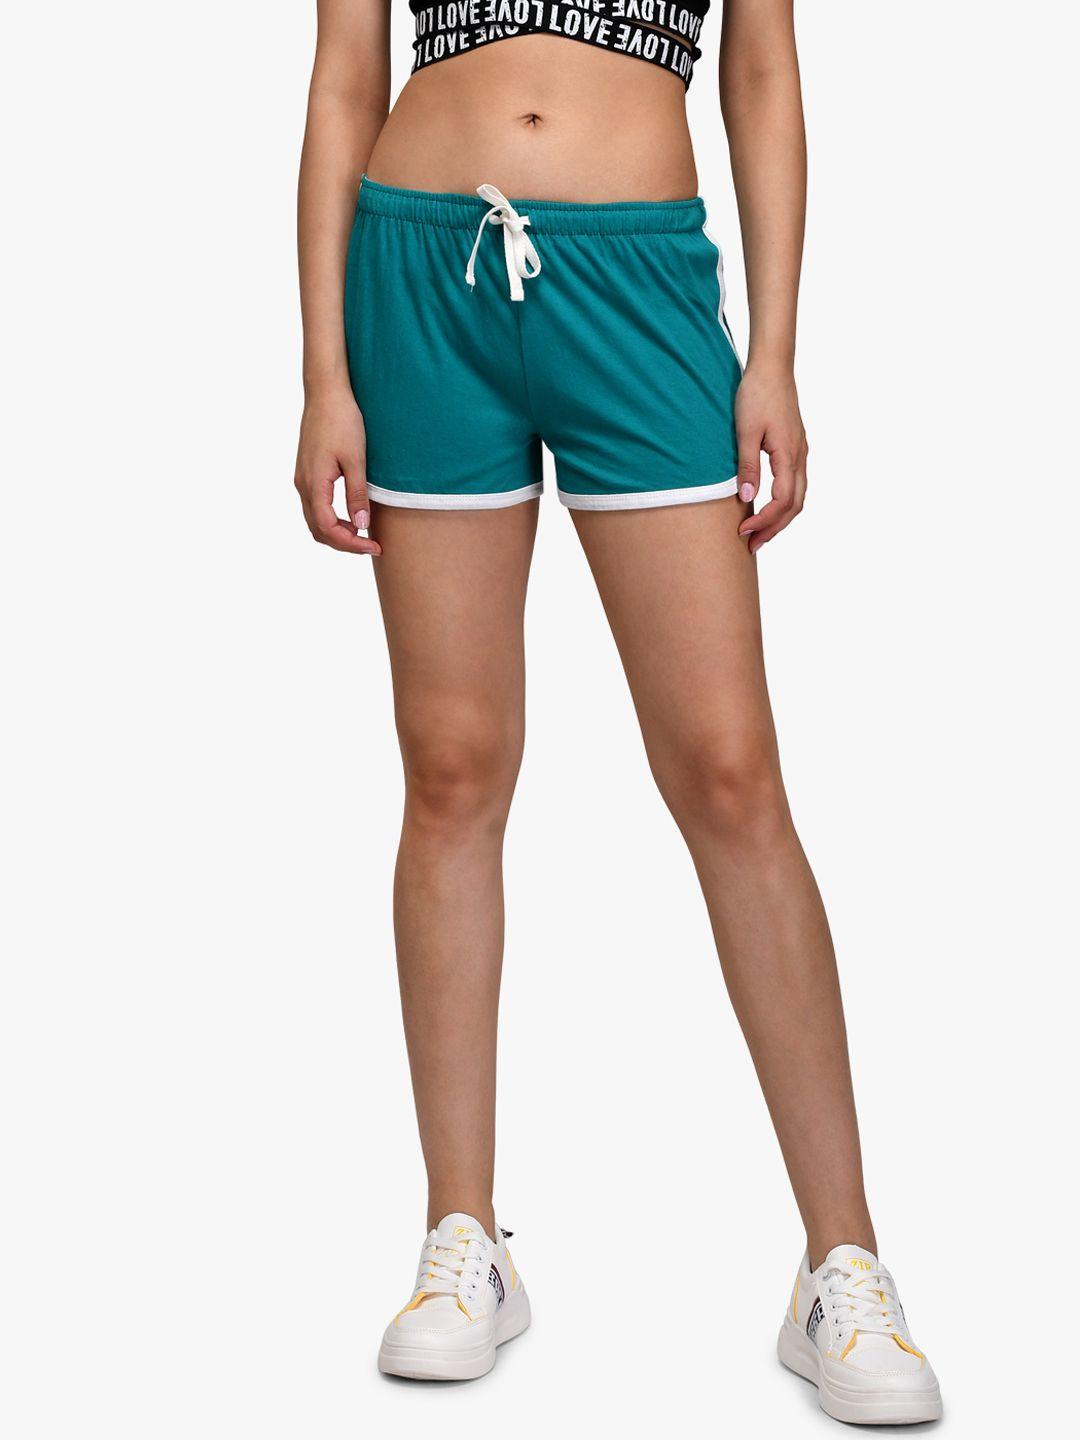 kotty-women-teal-green-solid-regular-fit-shorts